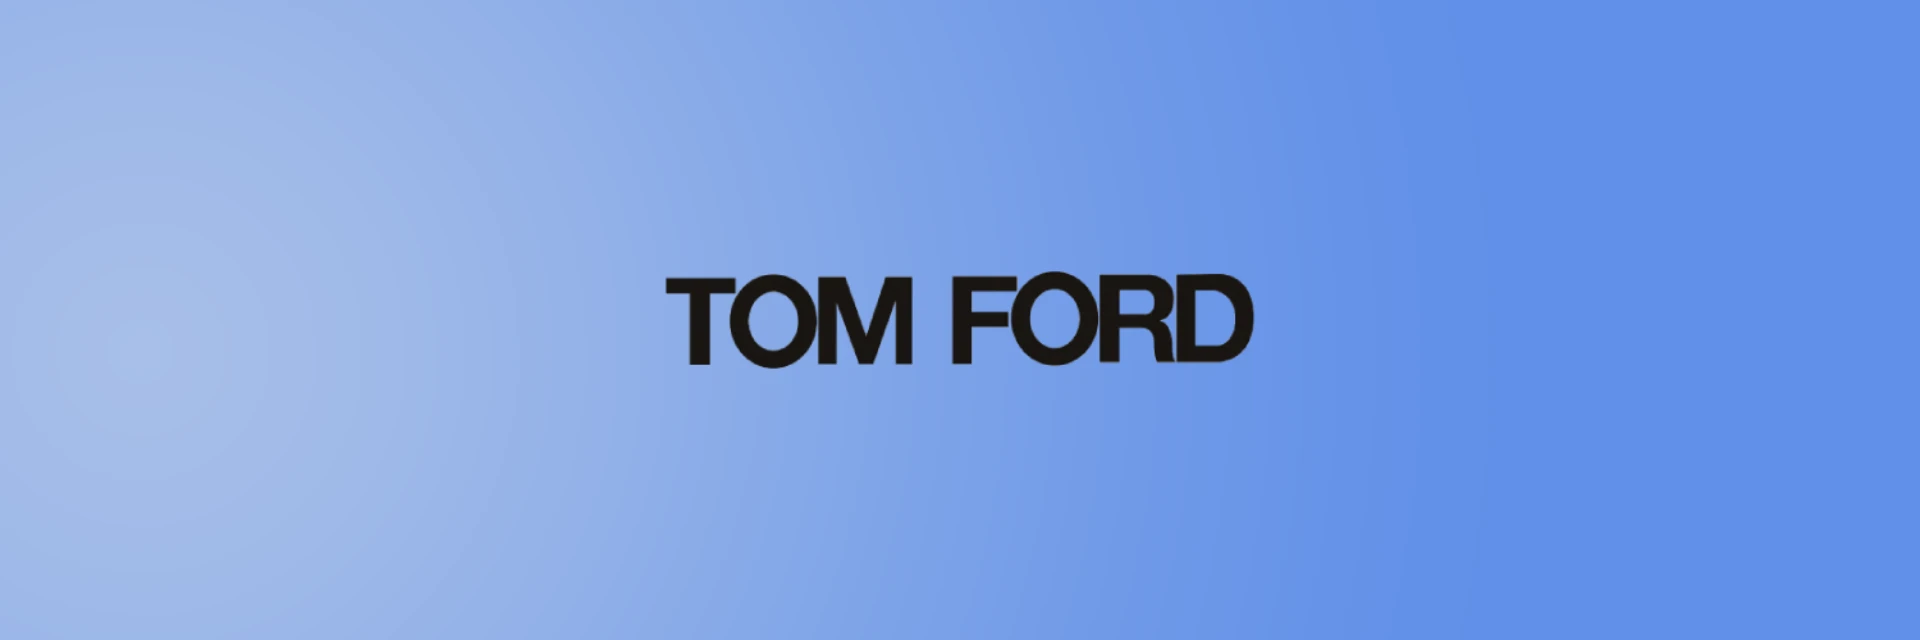 Tom Ford Perfume Brand Banner